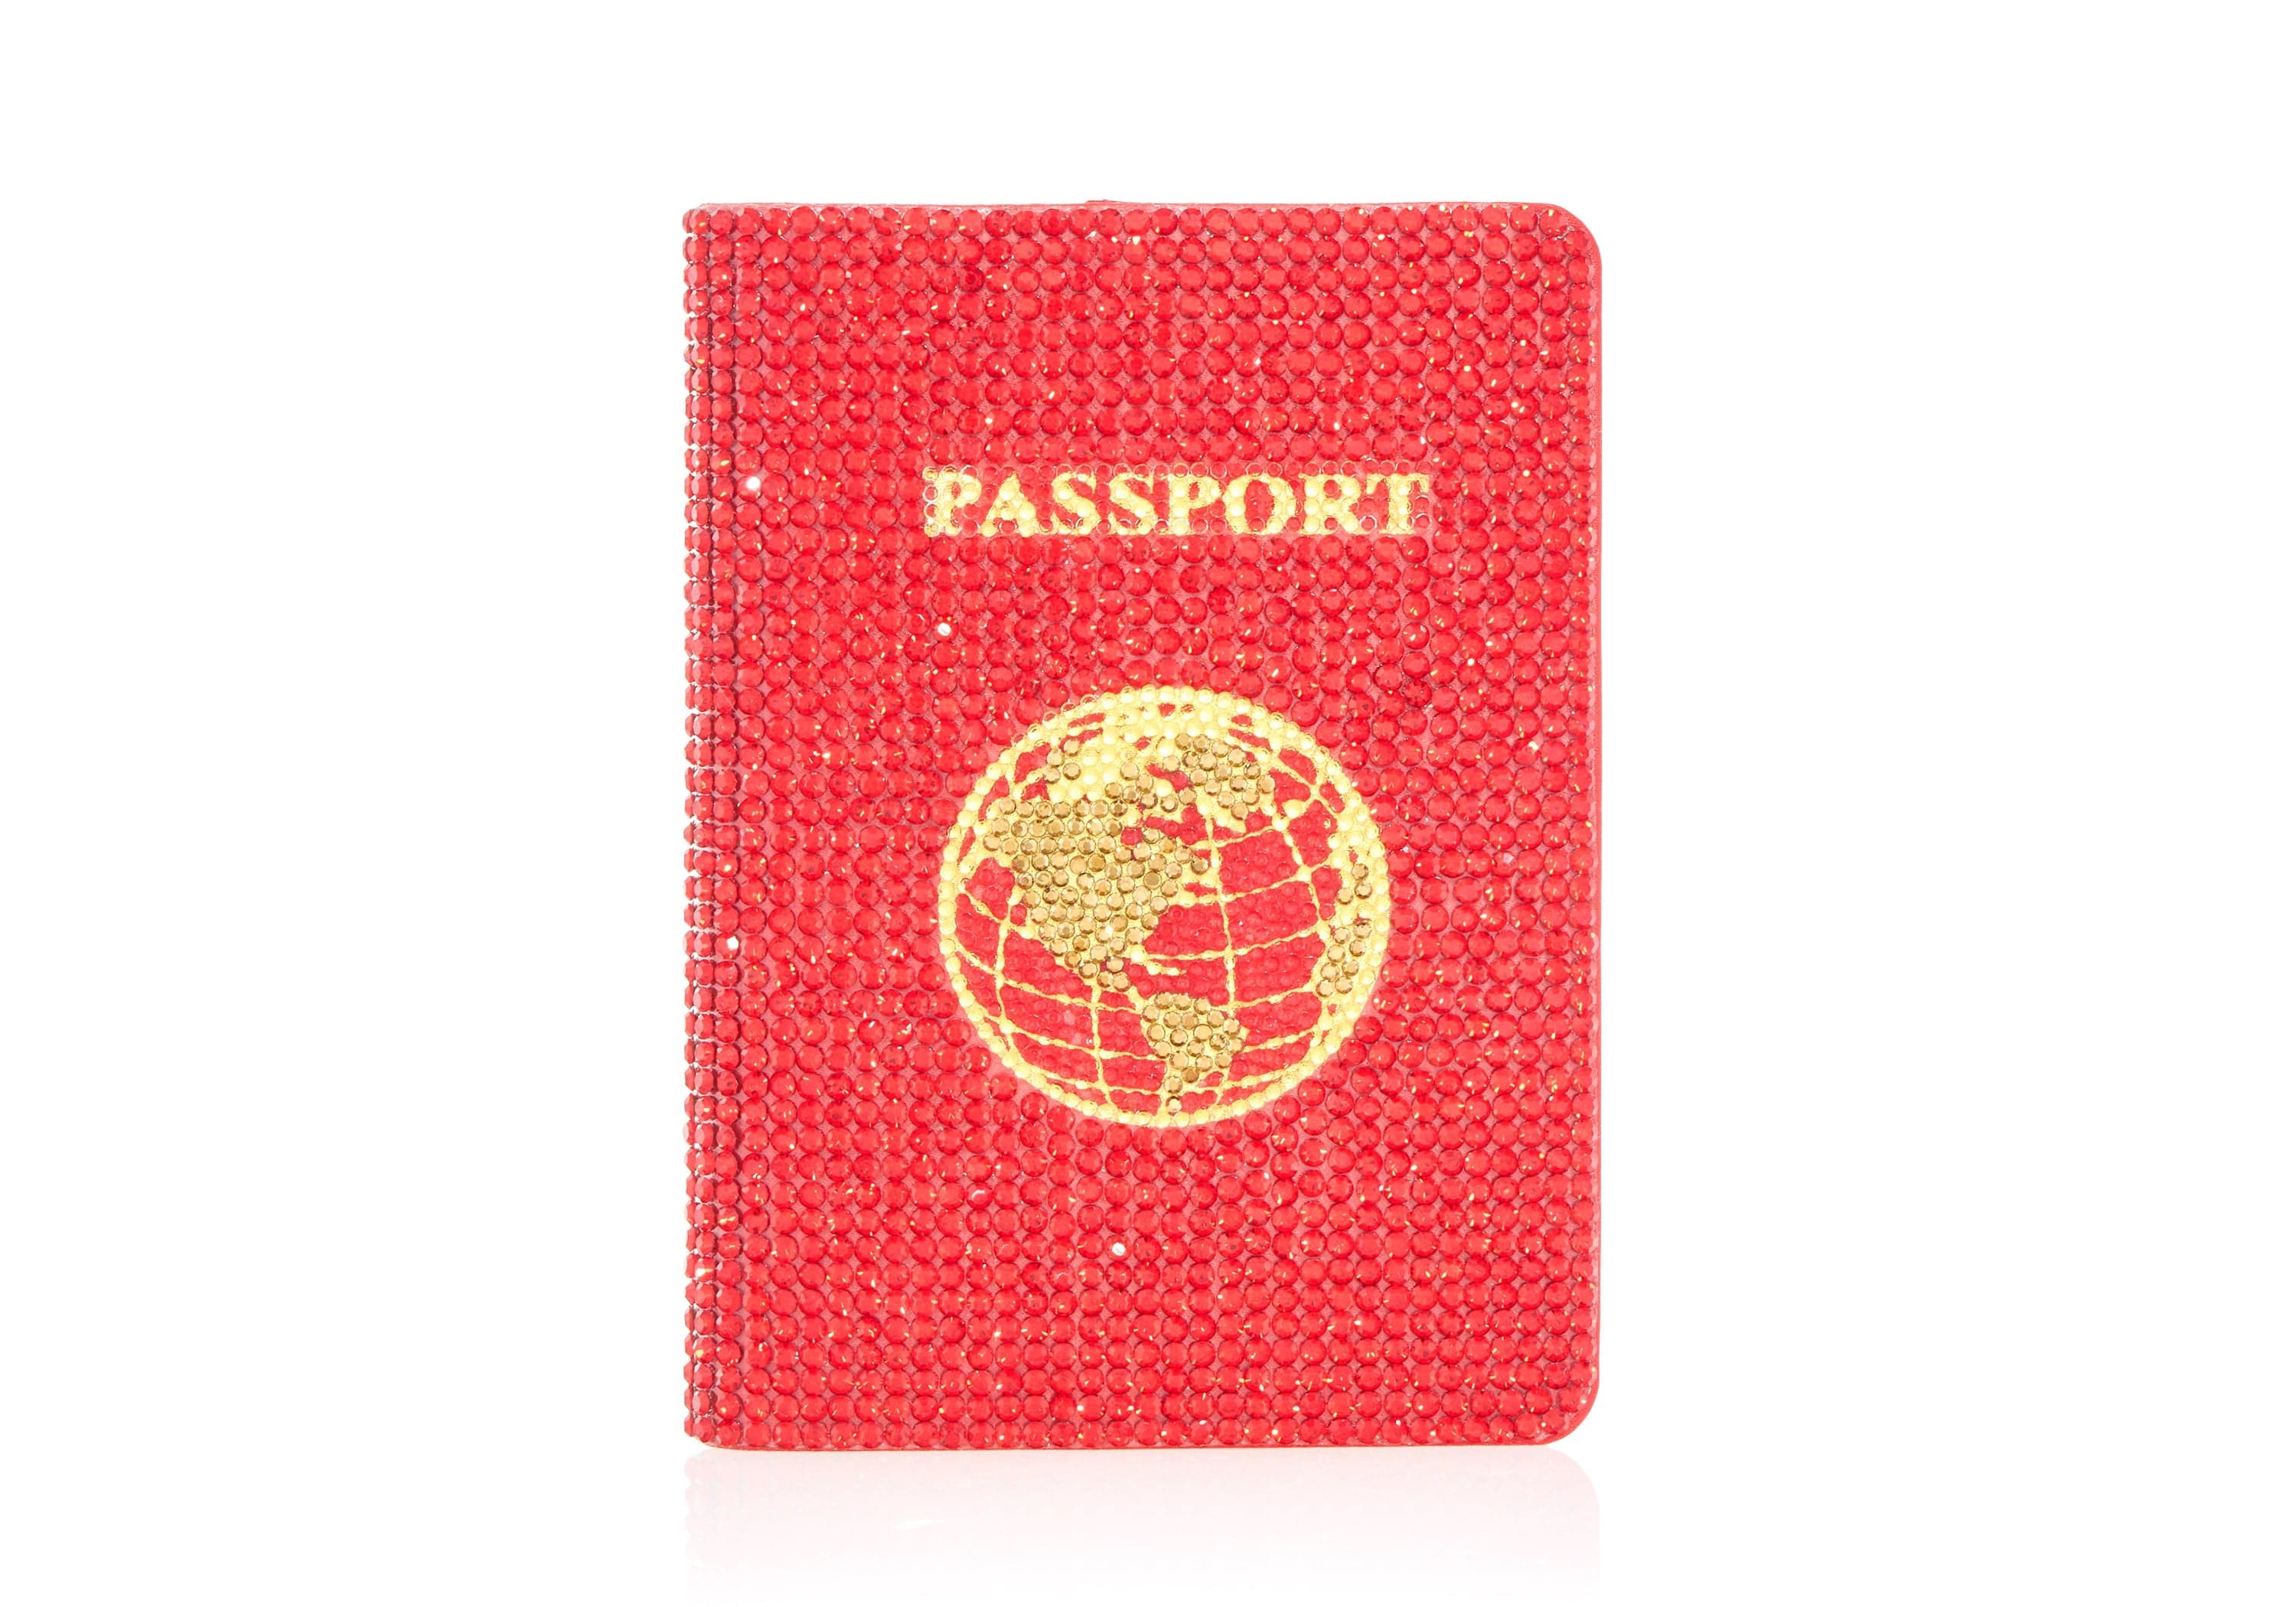 Personalized Passport Cover - Travel Style Kuwait